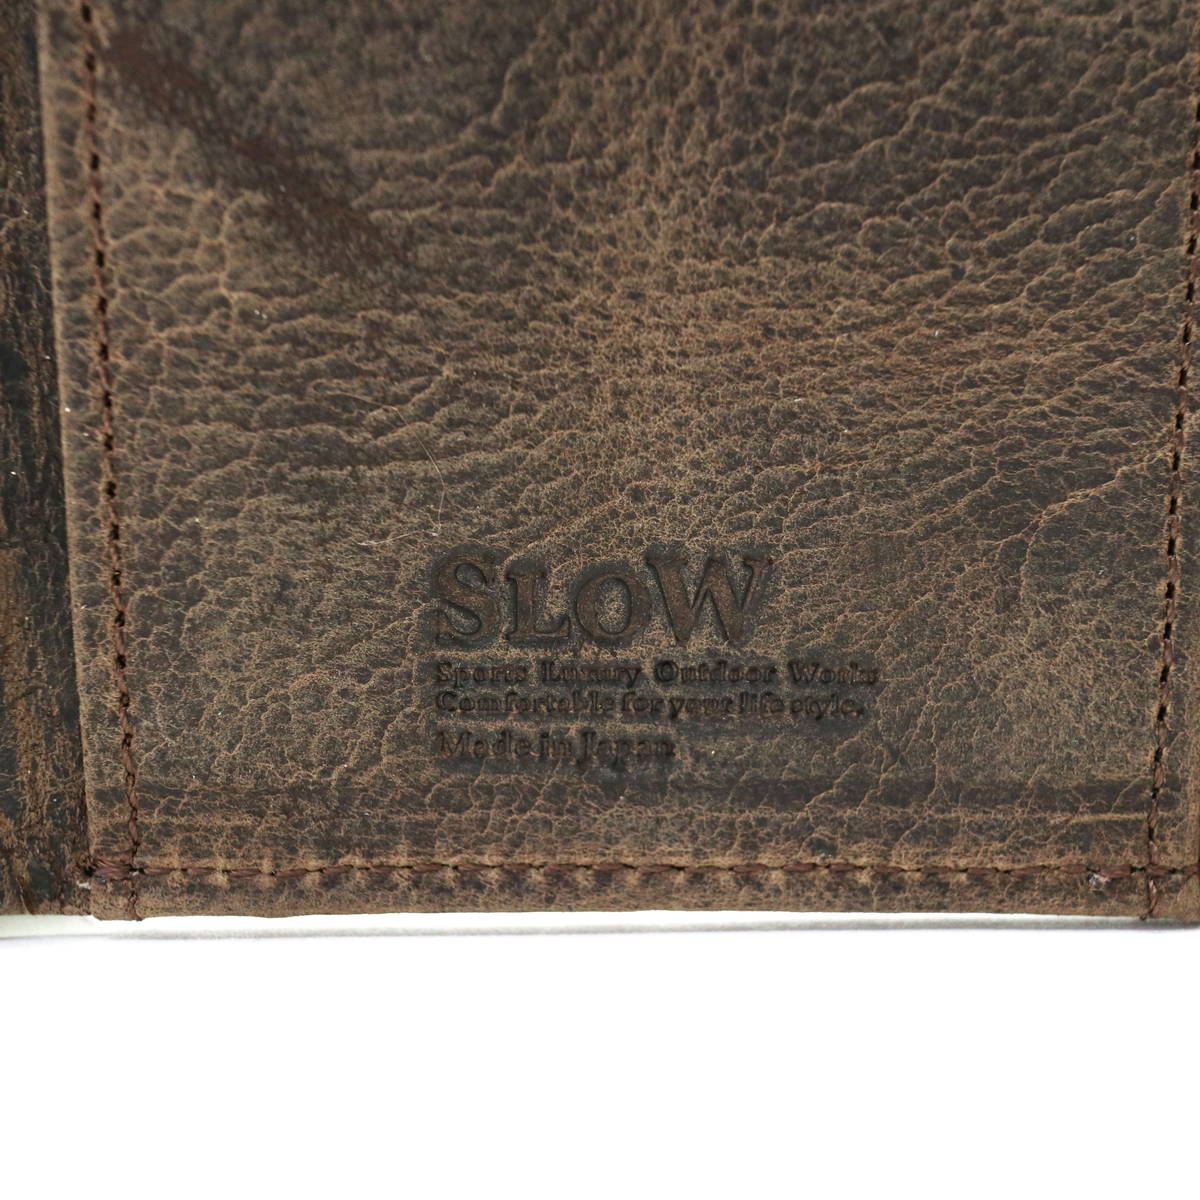 SLOW スロウ kudu hold mini wallet 三つ折り財布 SO743I